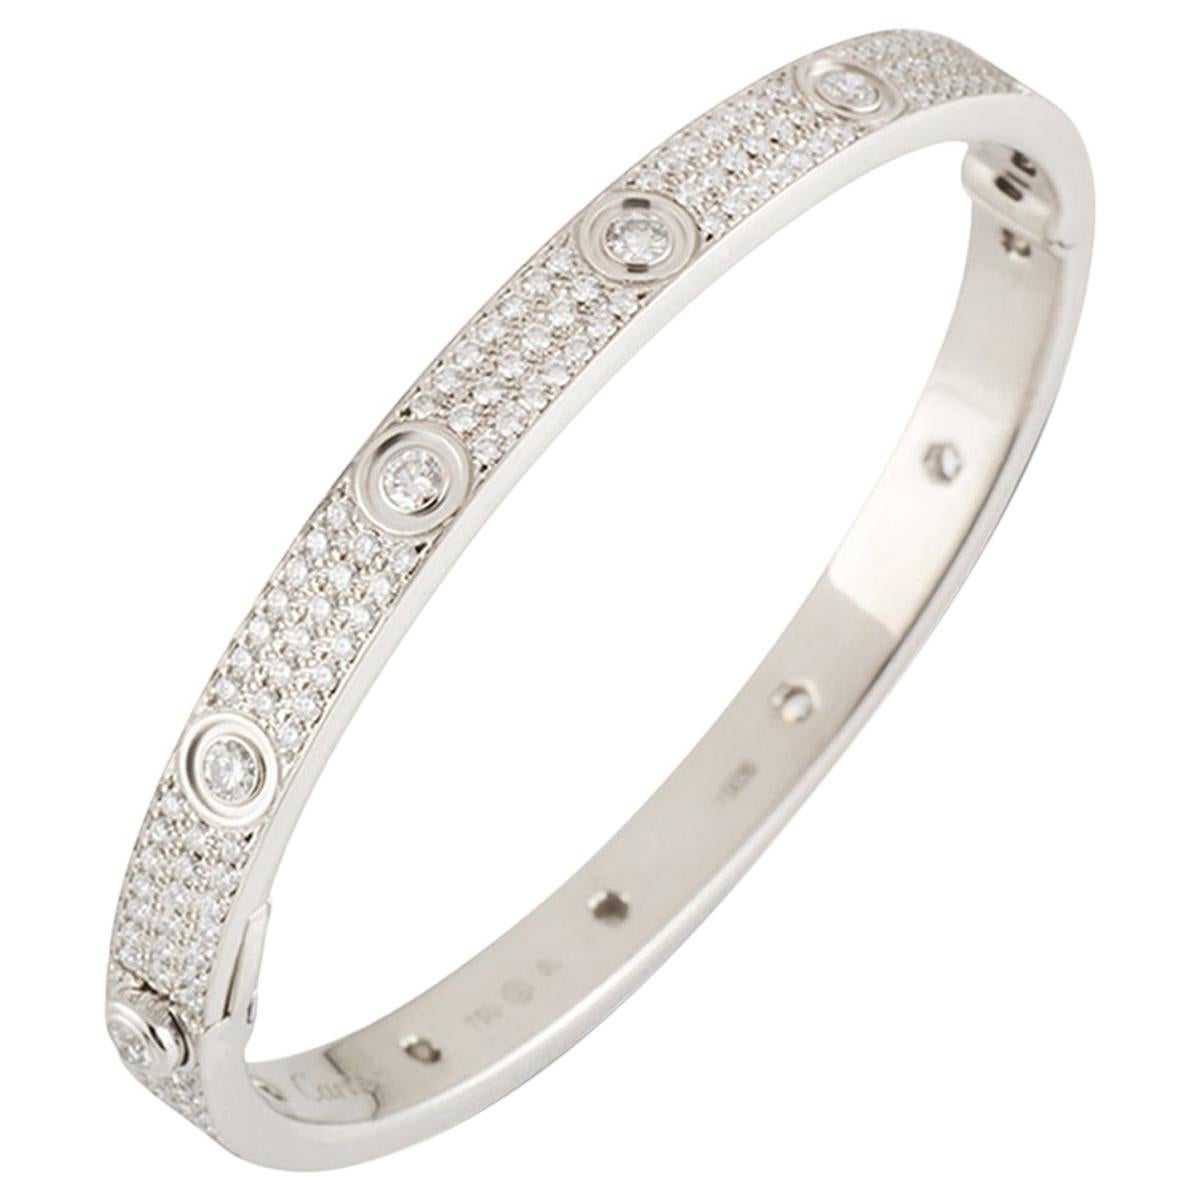 Cartier White Gold Pave Diamond Love Bracelet N6033602